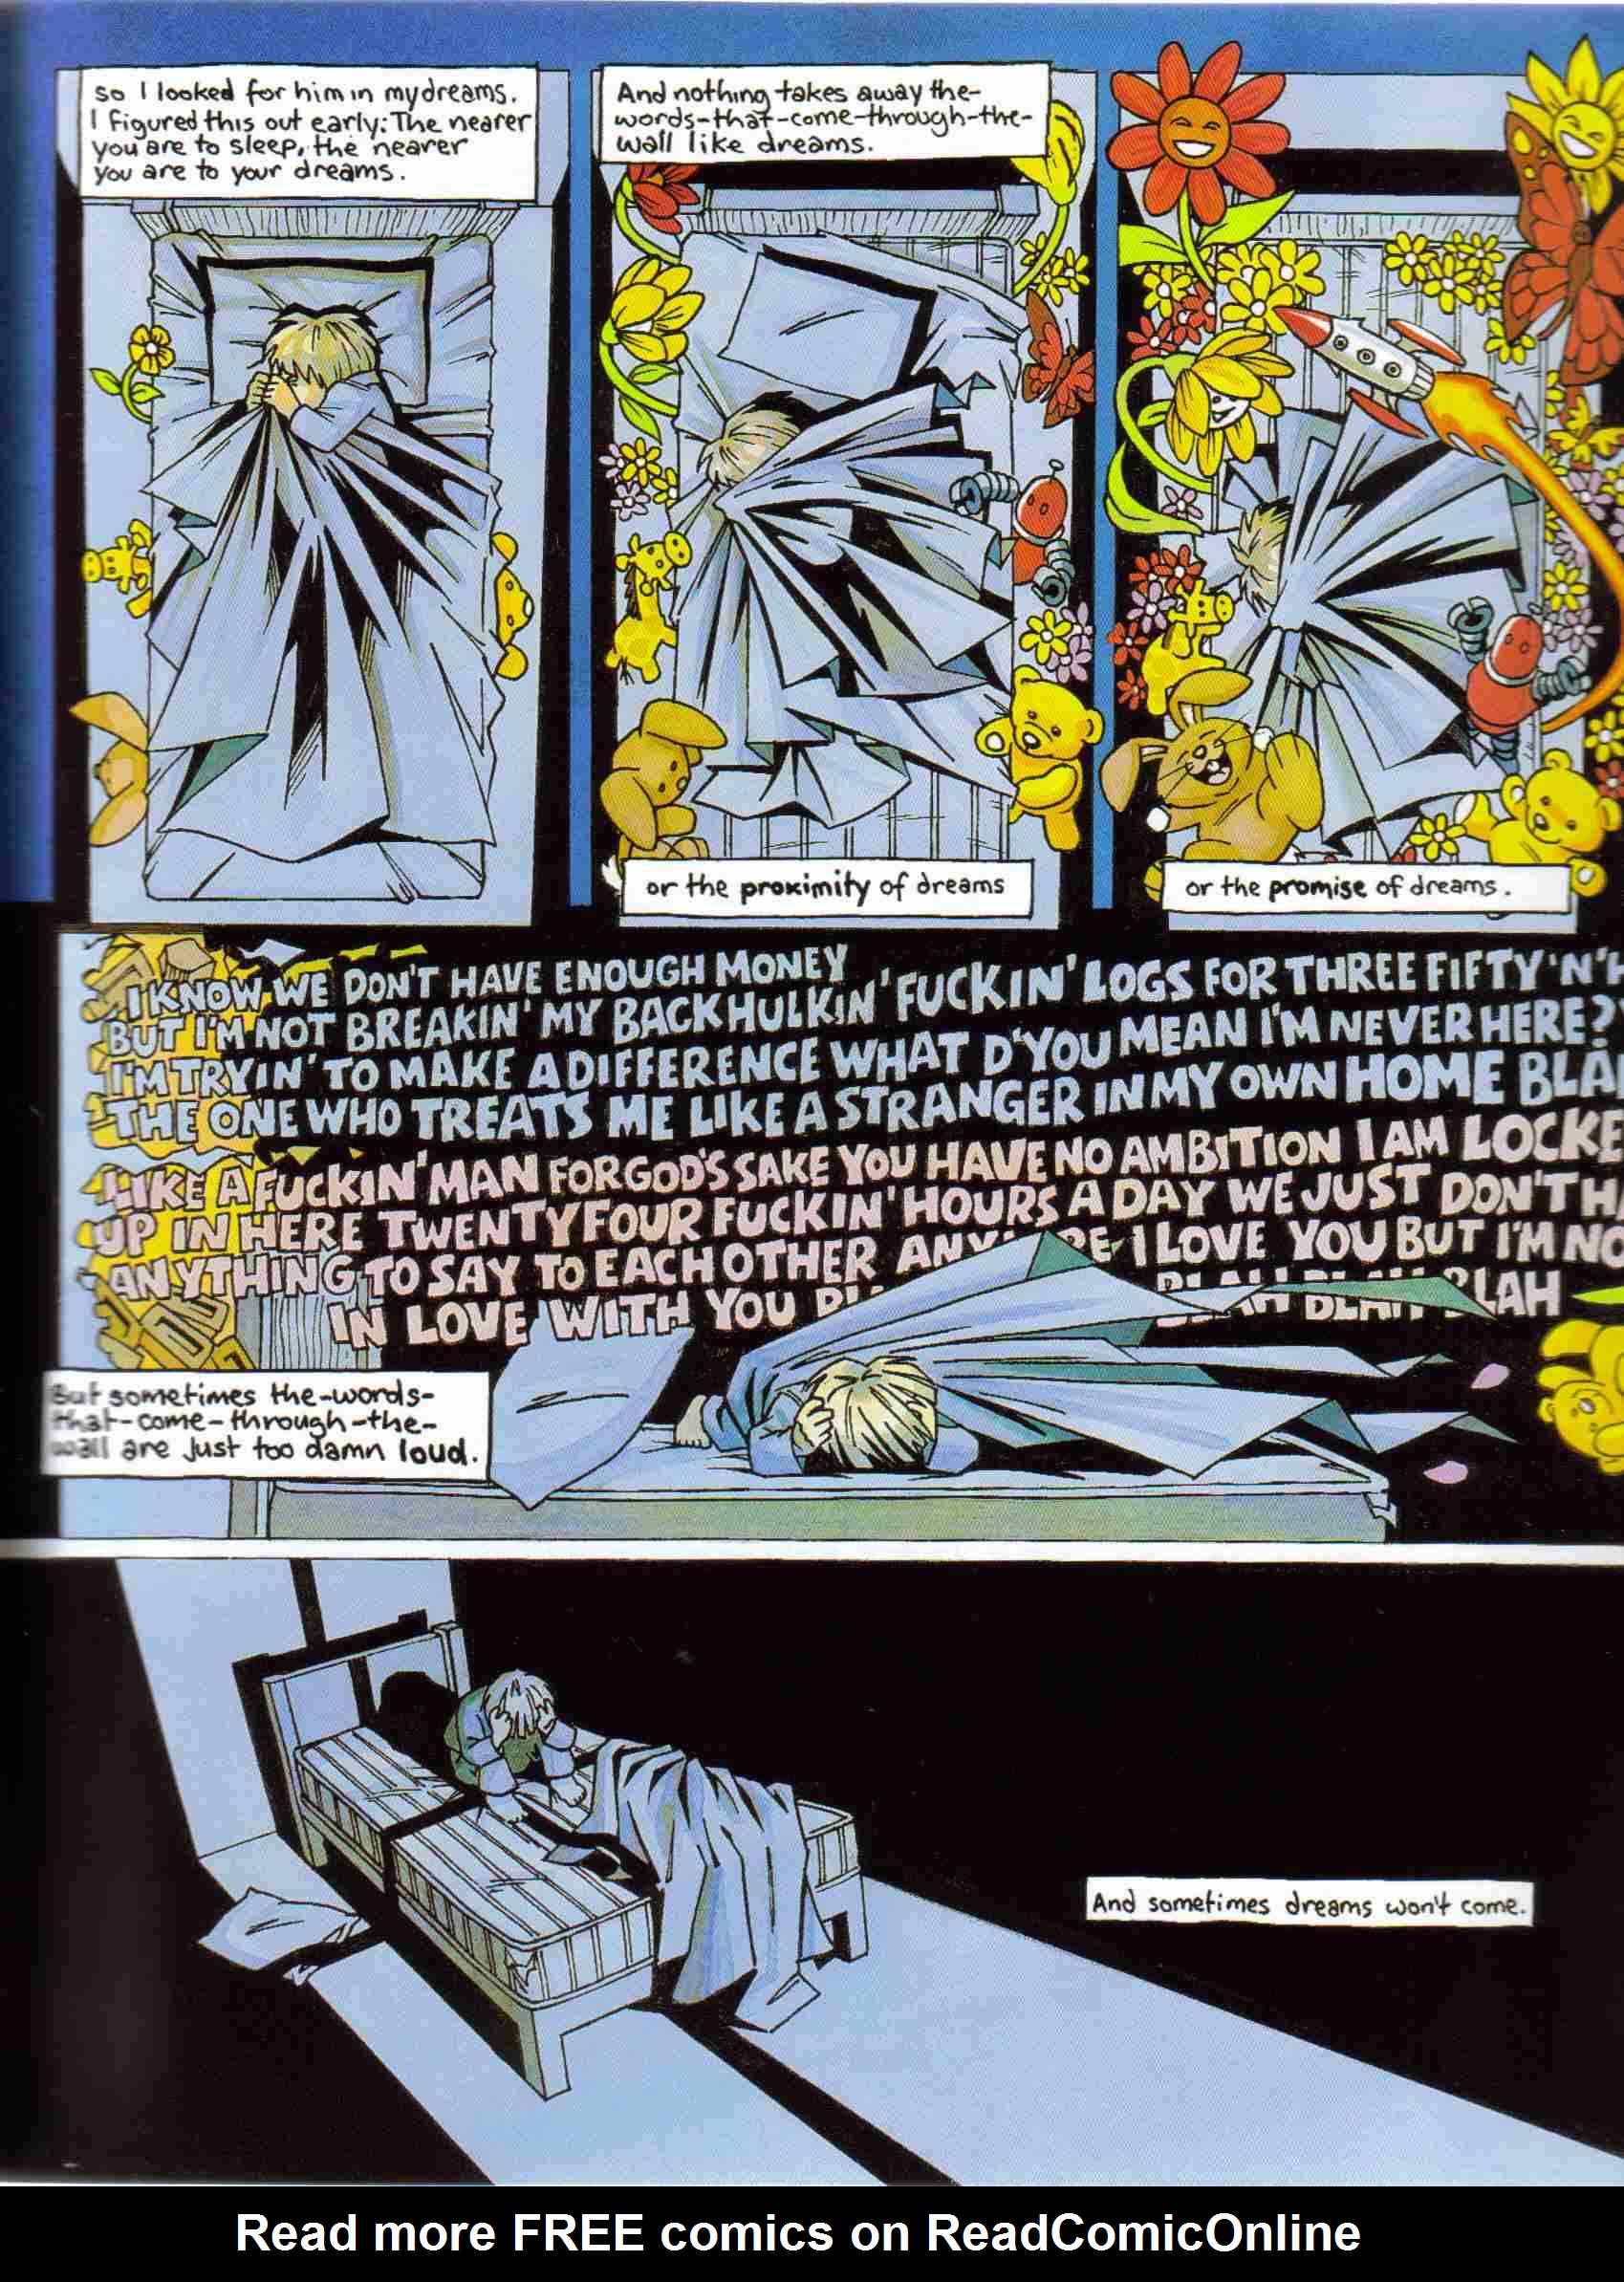 Read online GodSpeed: The Kurt Cobain Graphic comic -  Issue # TPB - 16